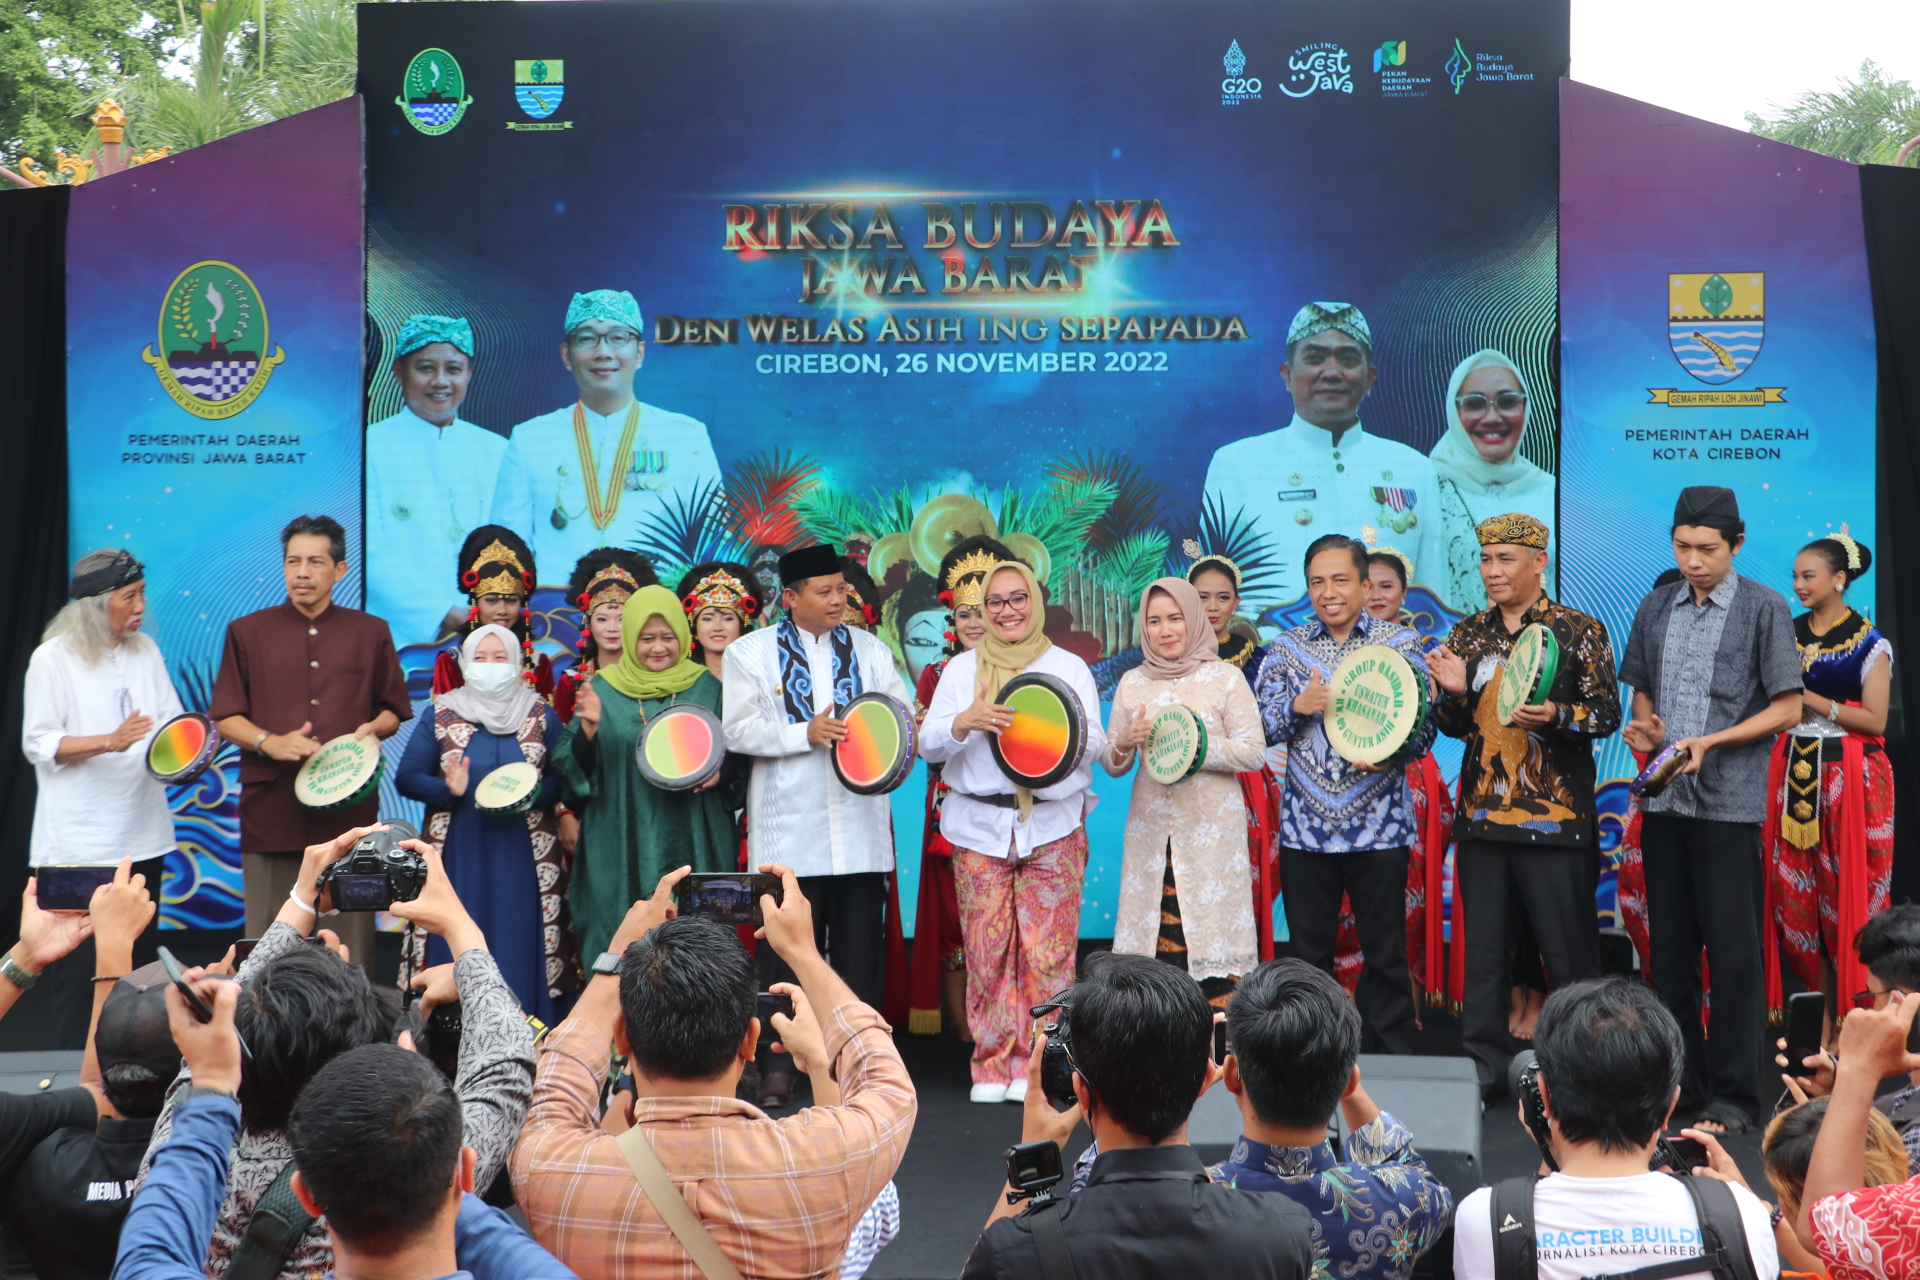 DPRD Turut Bangga Riksa Budaya Digelar di Kota Cirebon